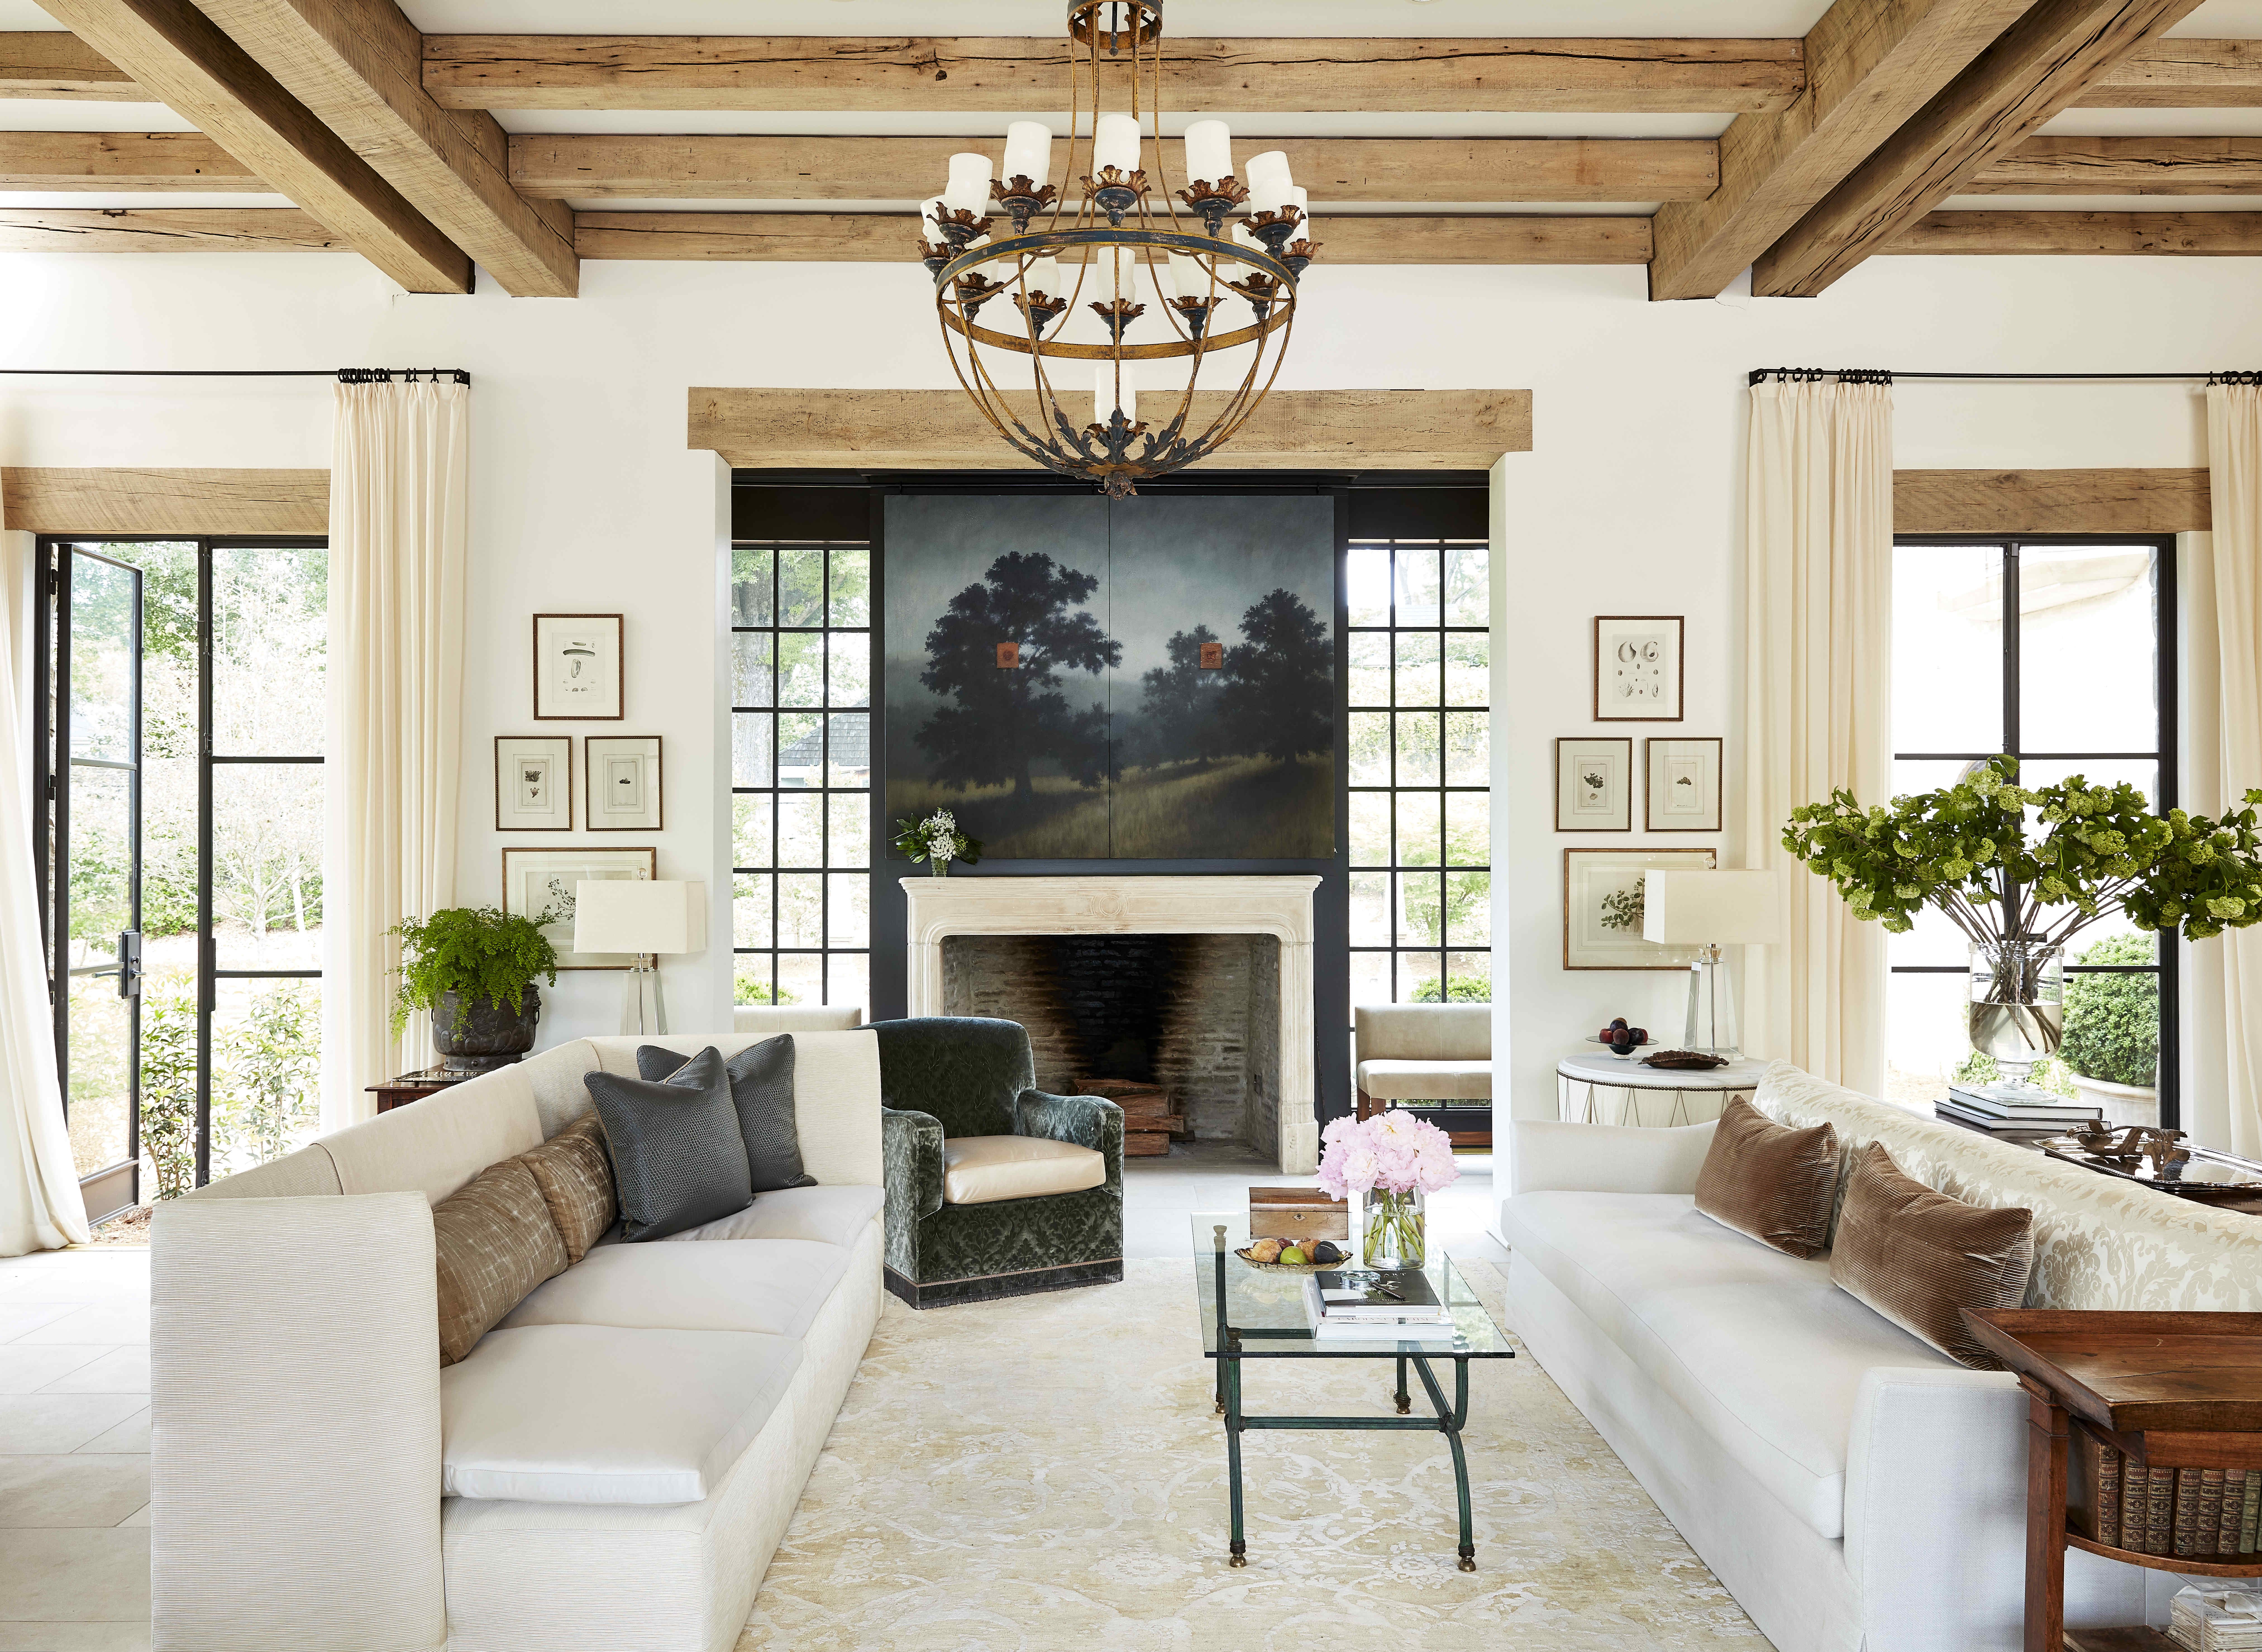 10 Simple Decorating Ideas from the HGTV Dream Home | House interior, Hgtv  dream home, Home